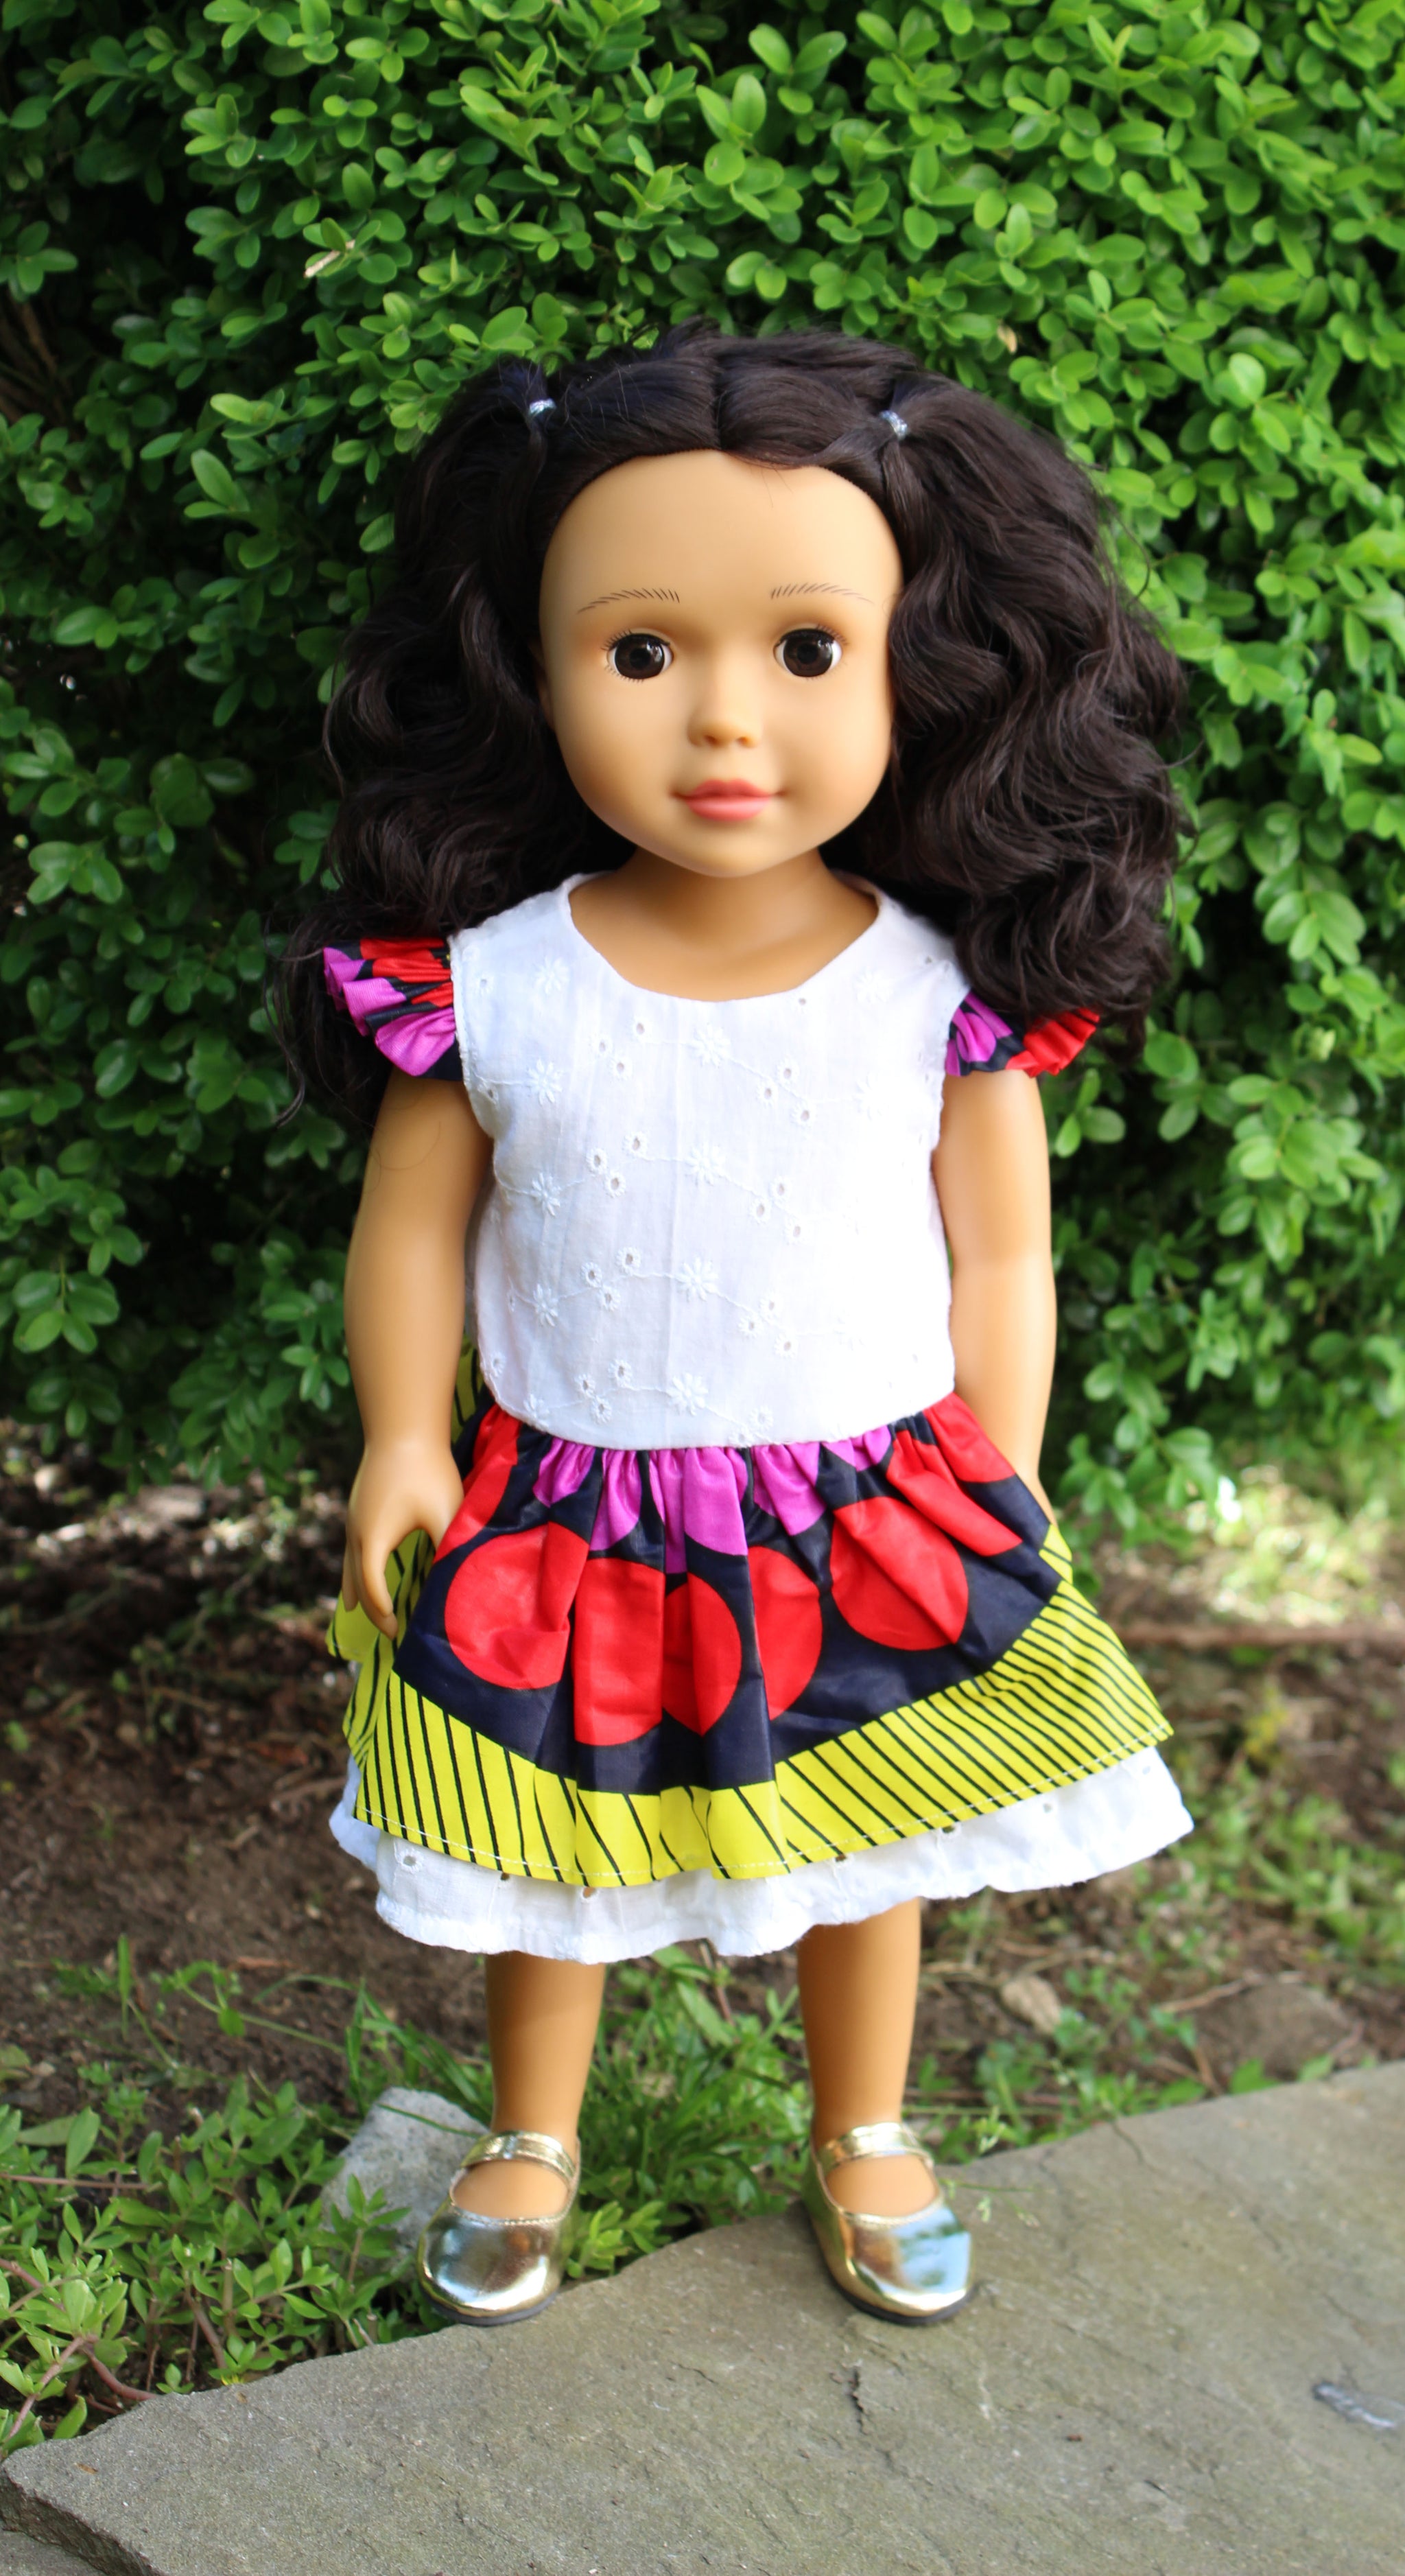 hispanic dolls with curly hair